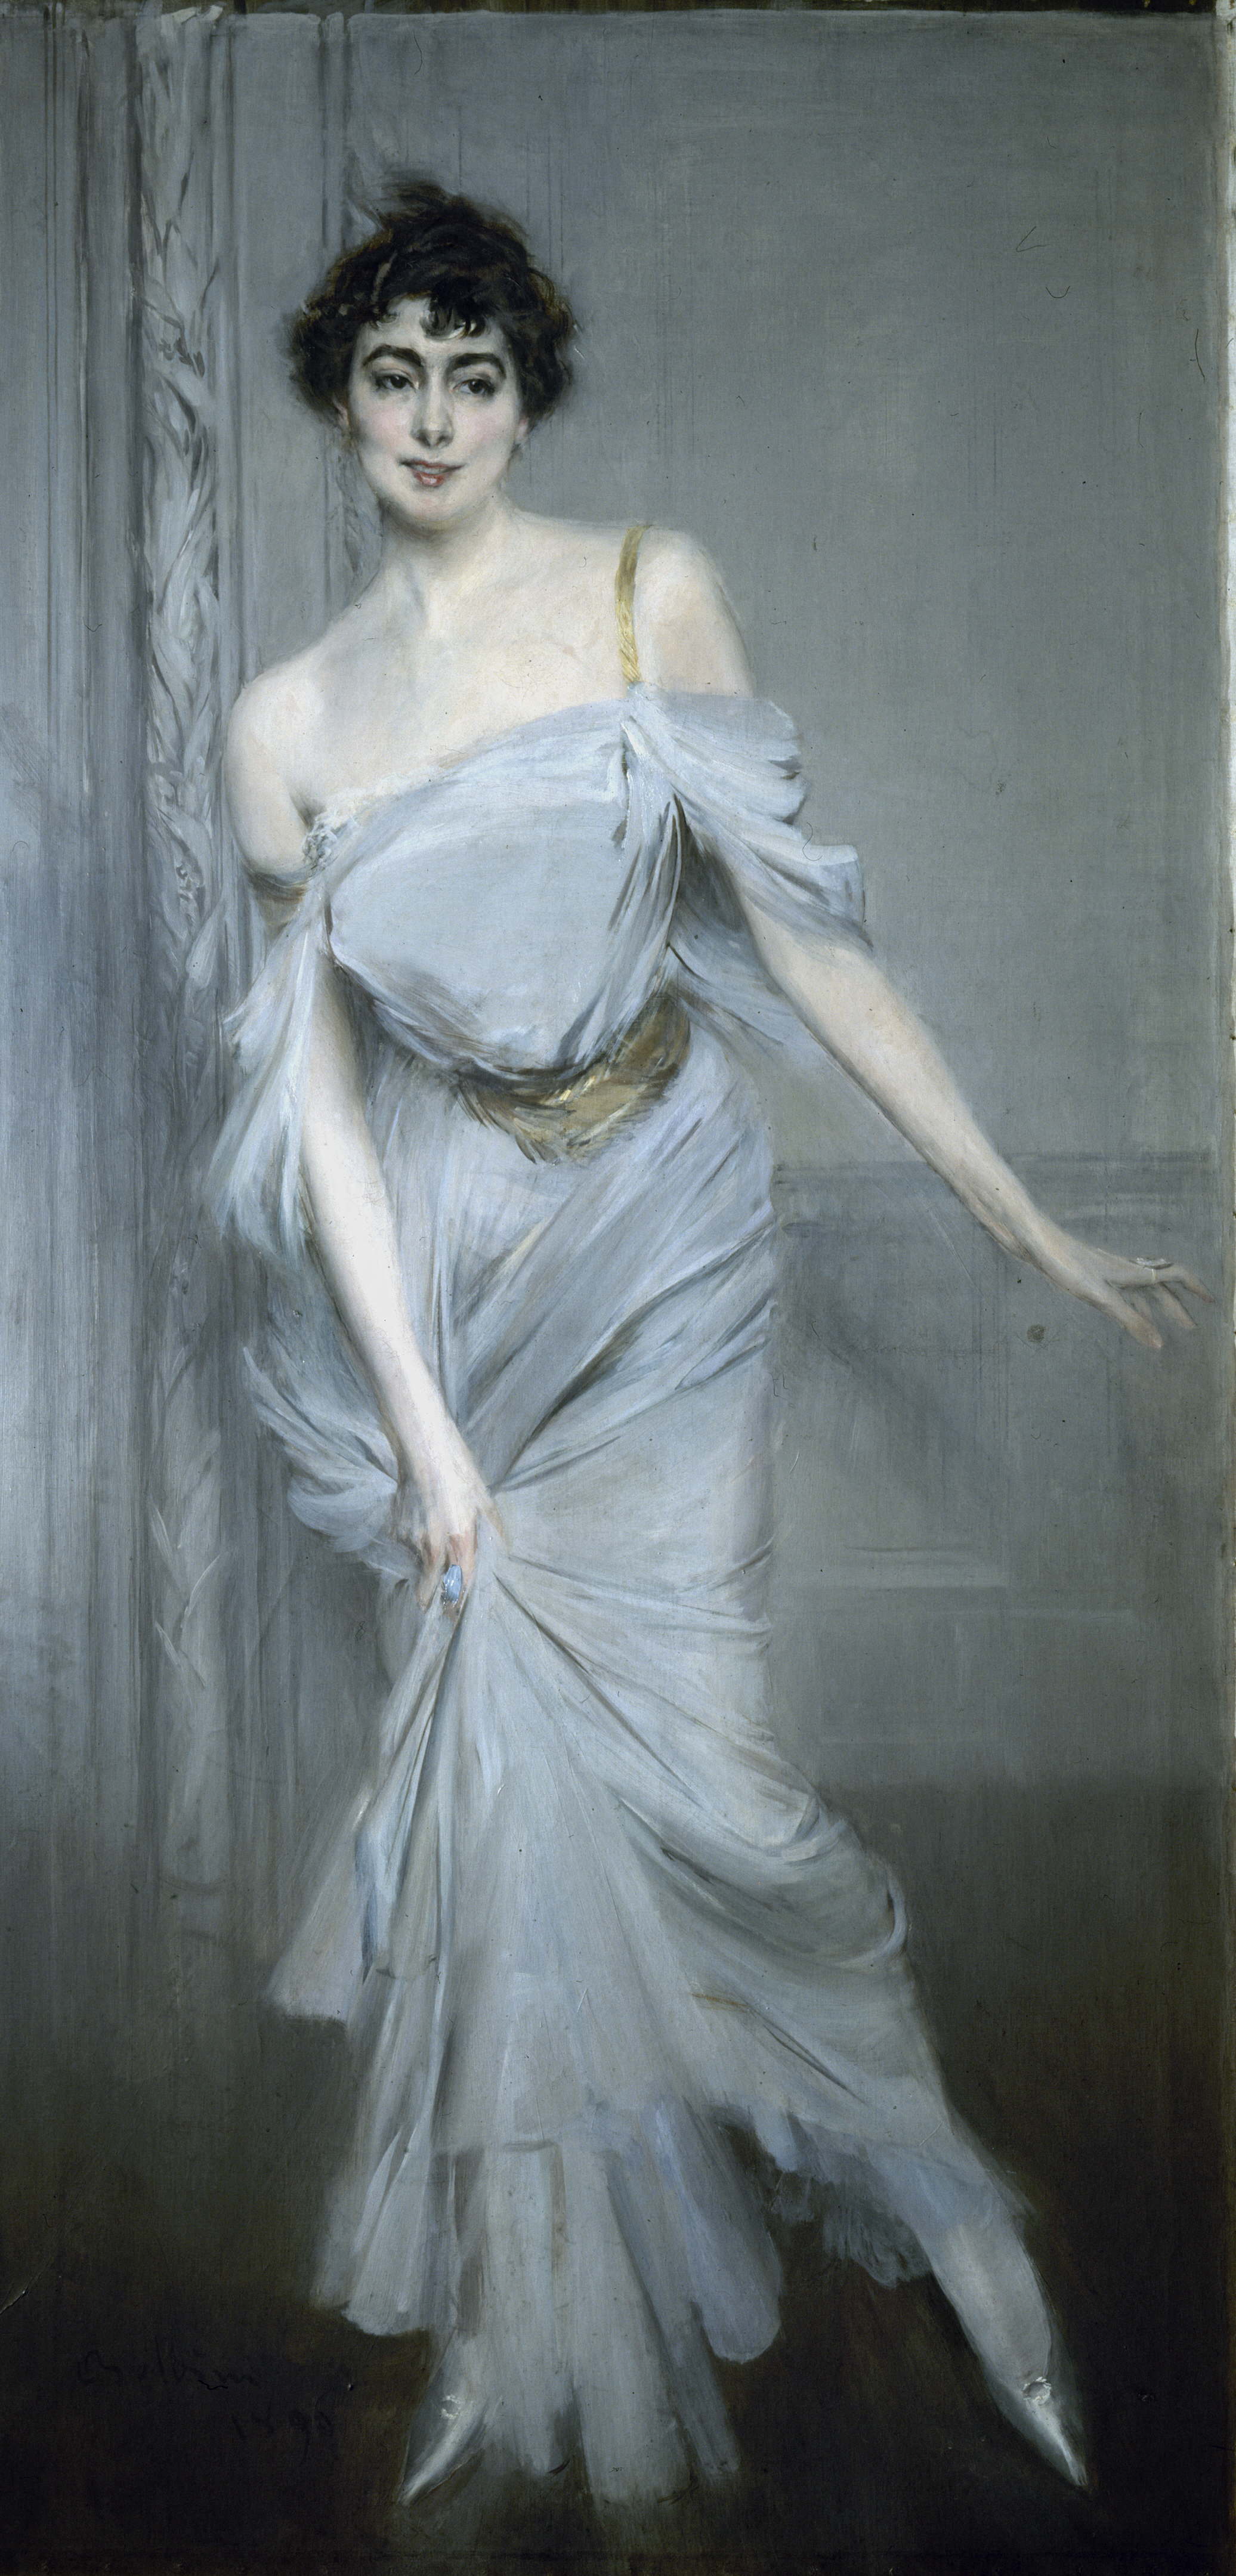  Ritratto di Madame Charles Max, 1896, olio su tela cm 203×100, Museo d'Orsay, Parigi. Credito: © Roger-Viollet/contrasto